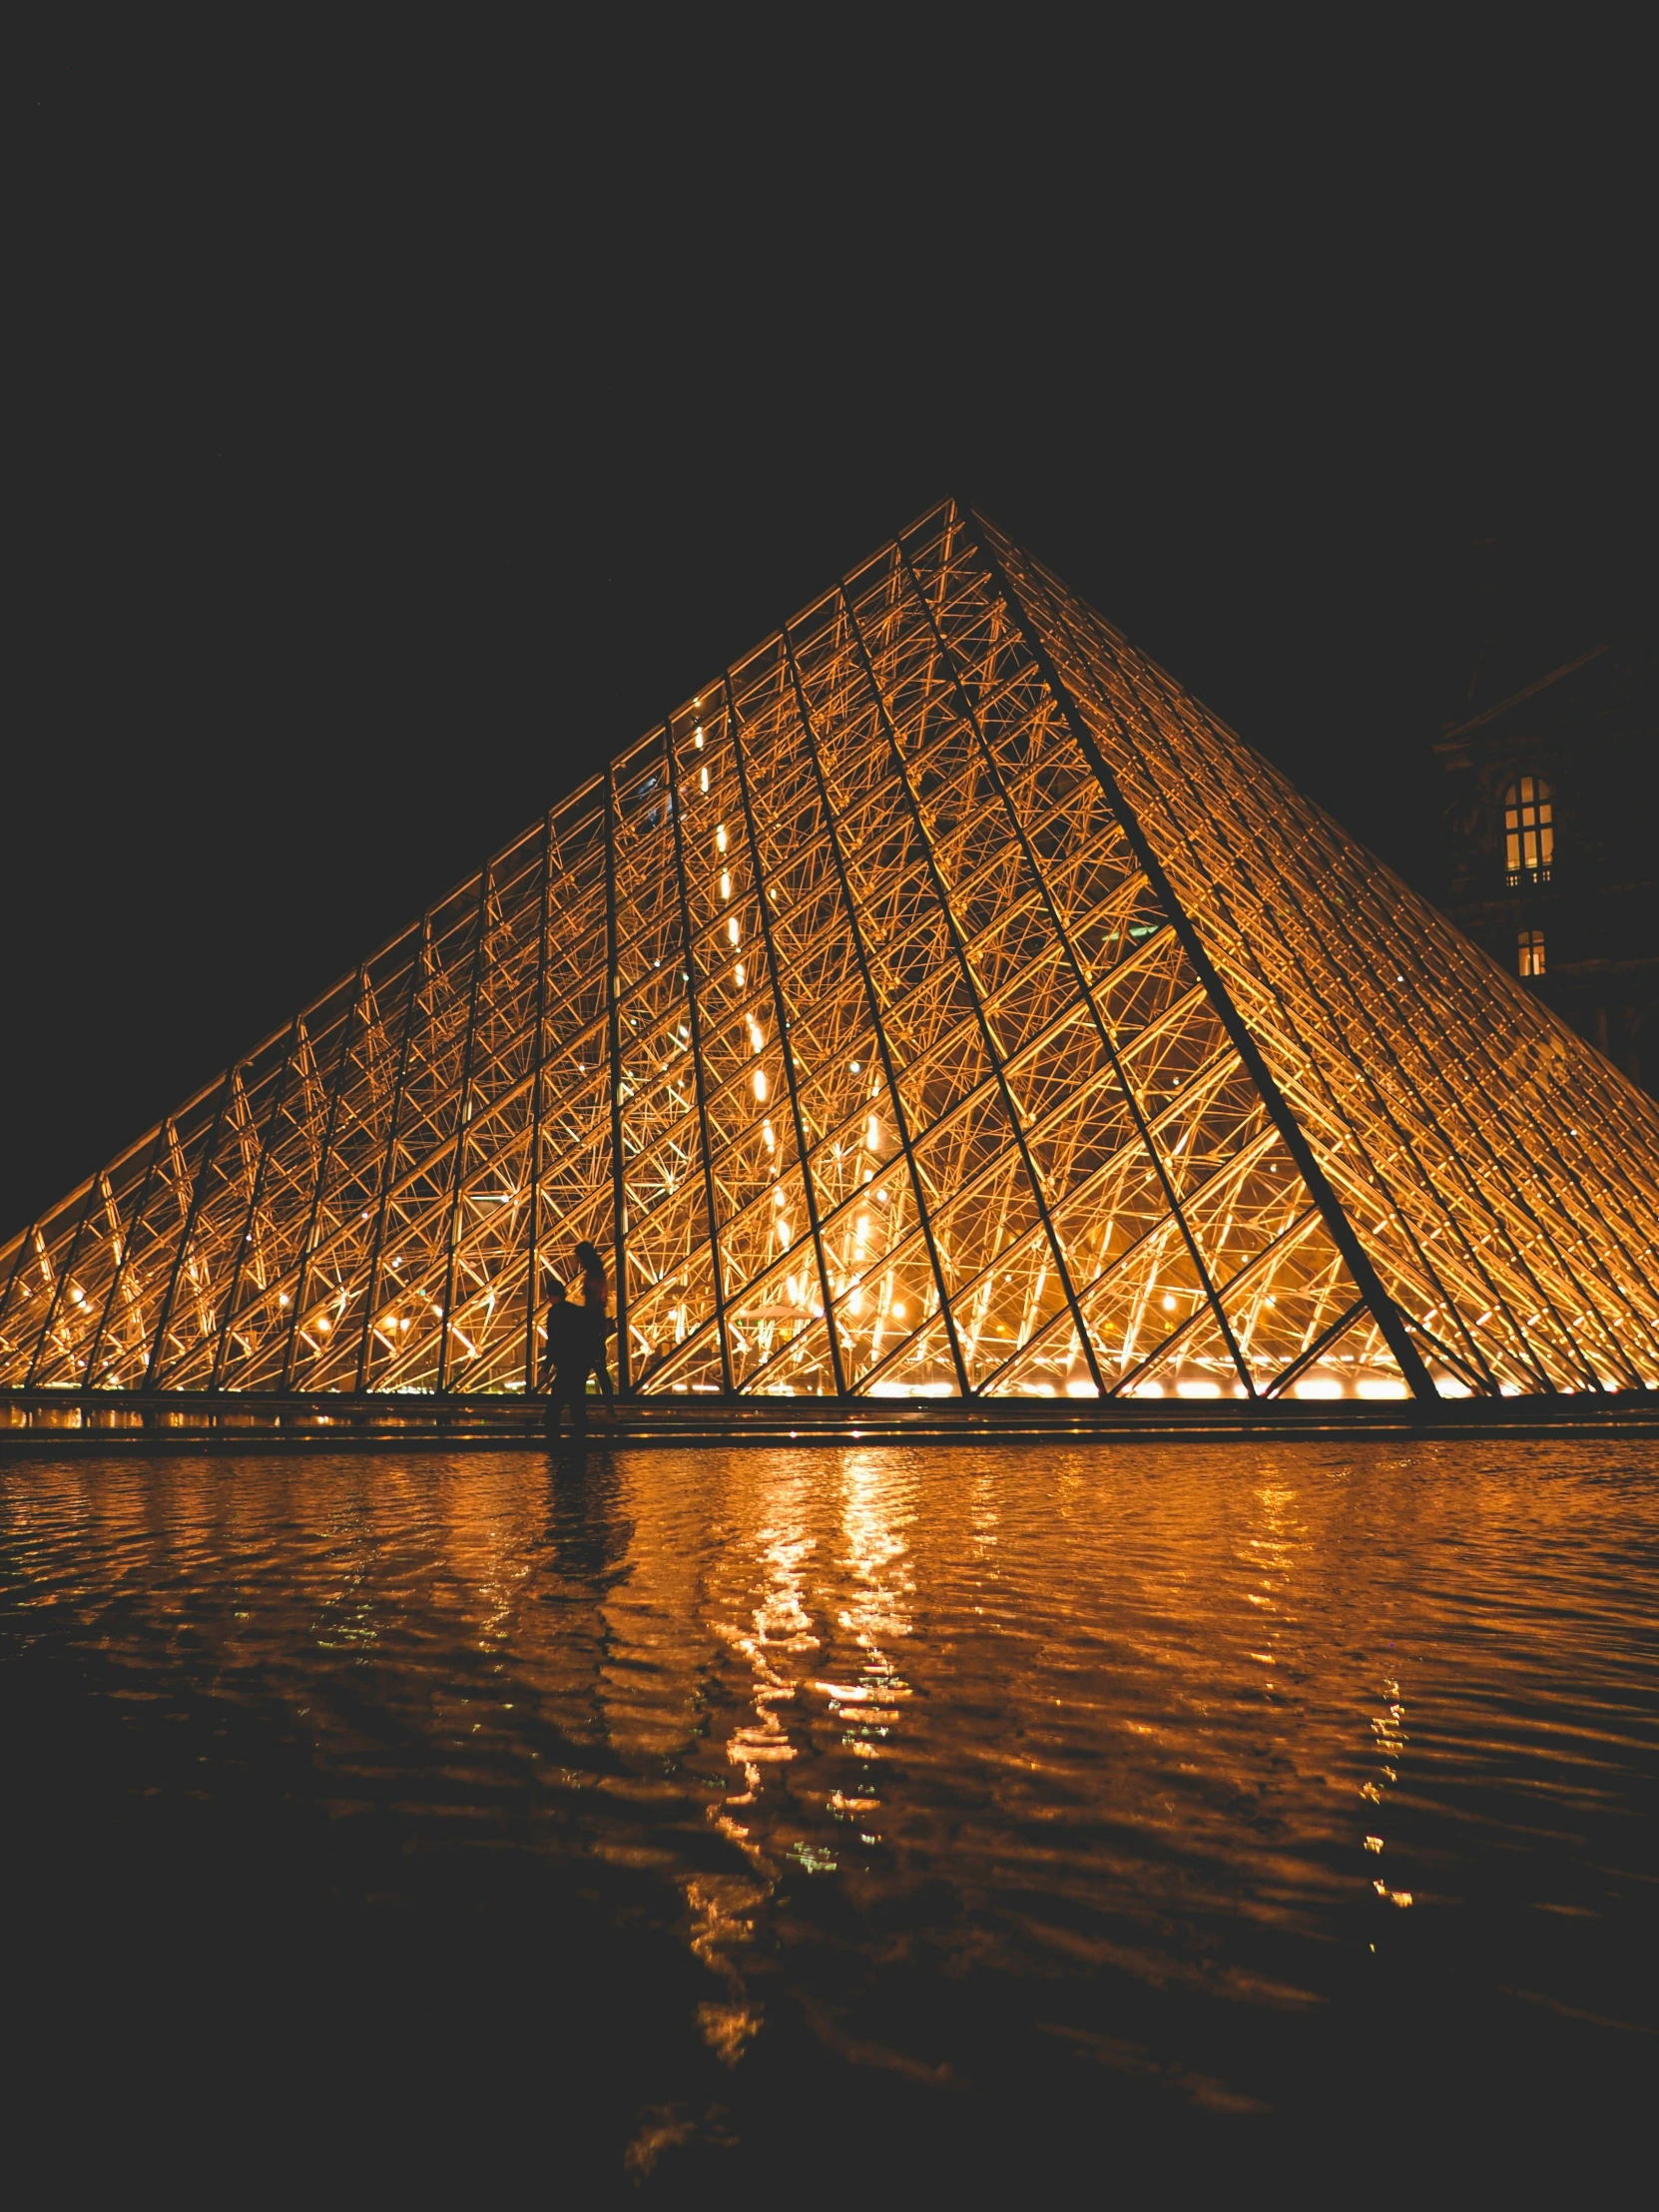 the pyramid has lights all around it